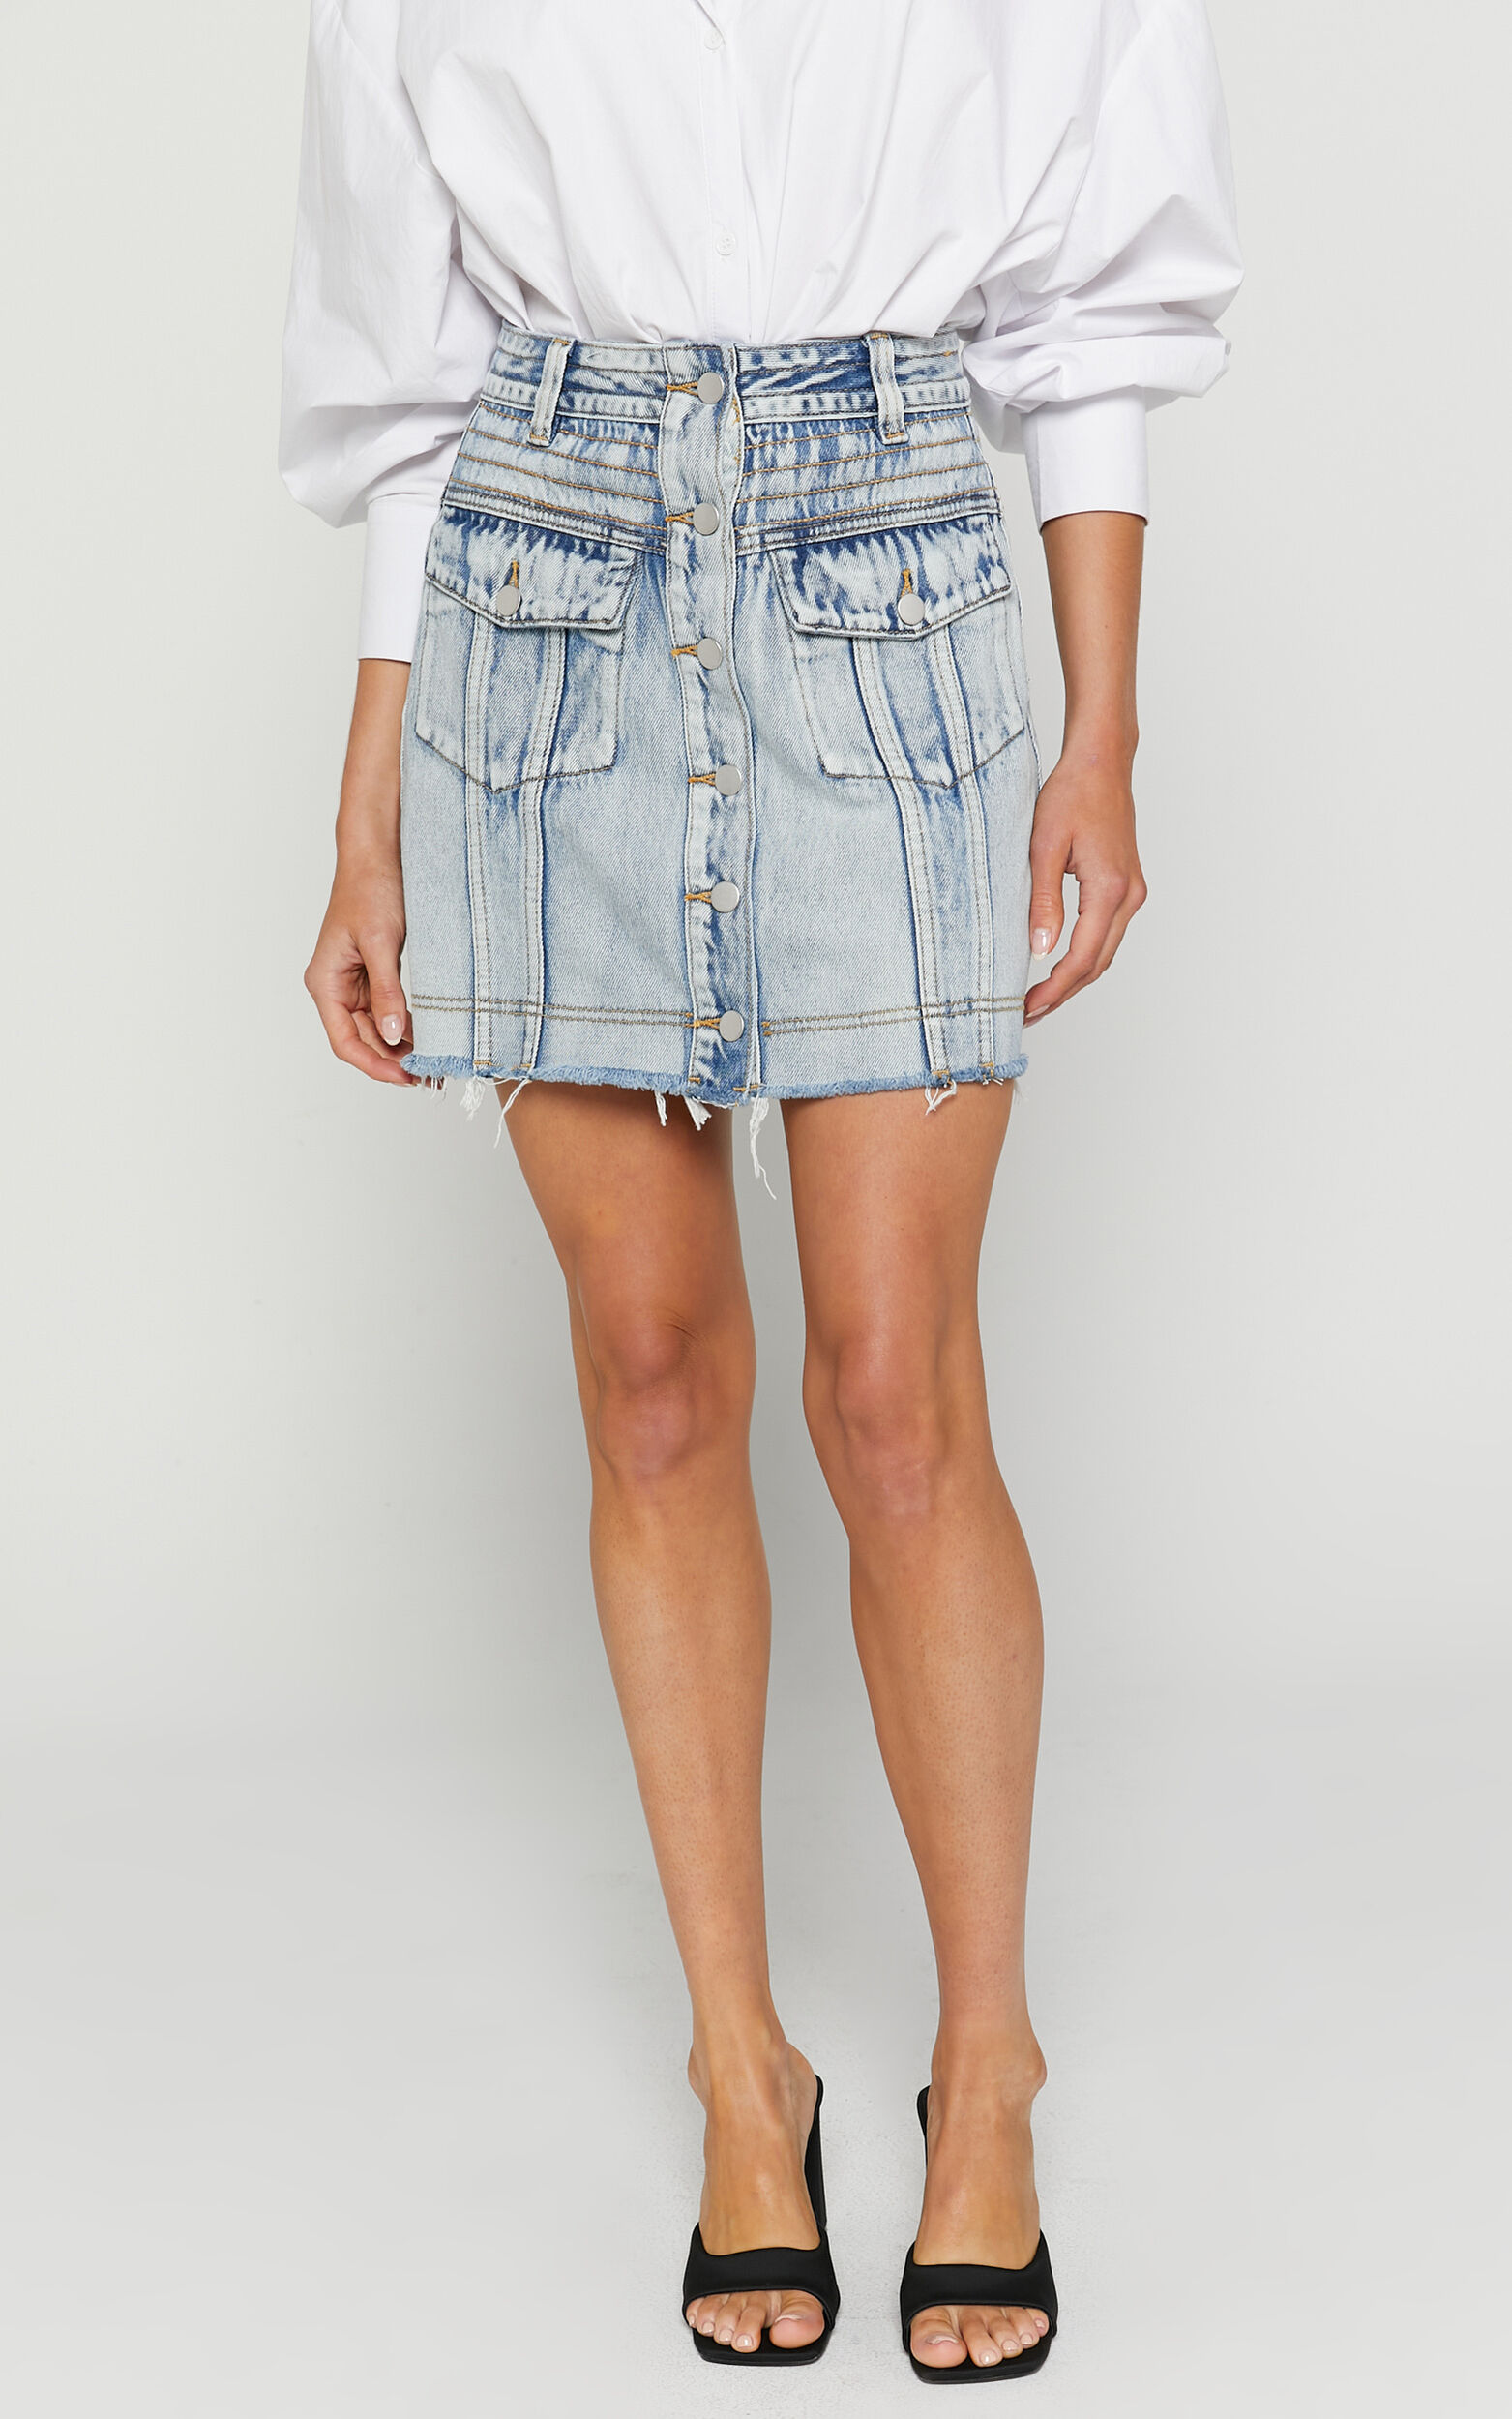 Gennlee Mini Skirt - Cotton Contrast Denim Skirt in Light Wash